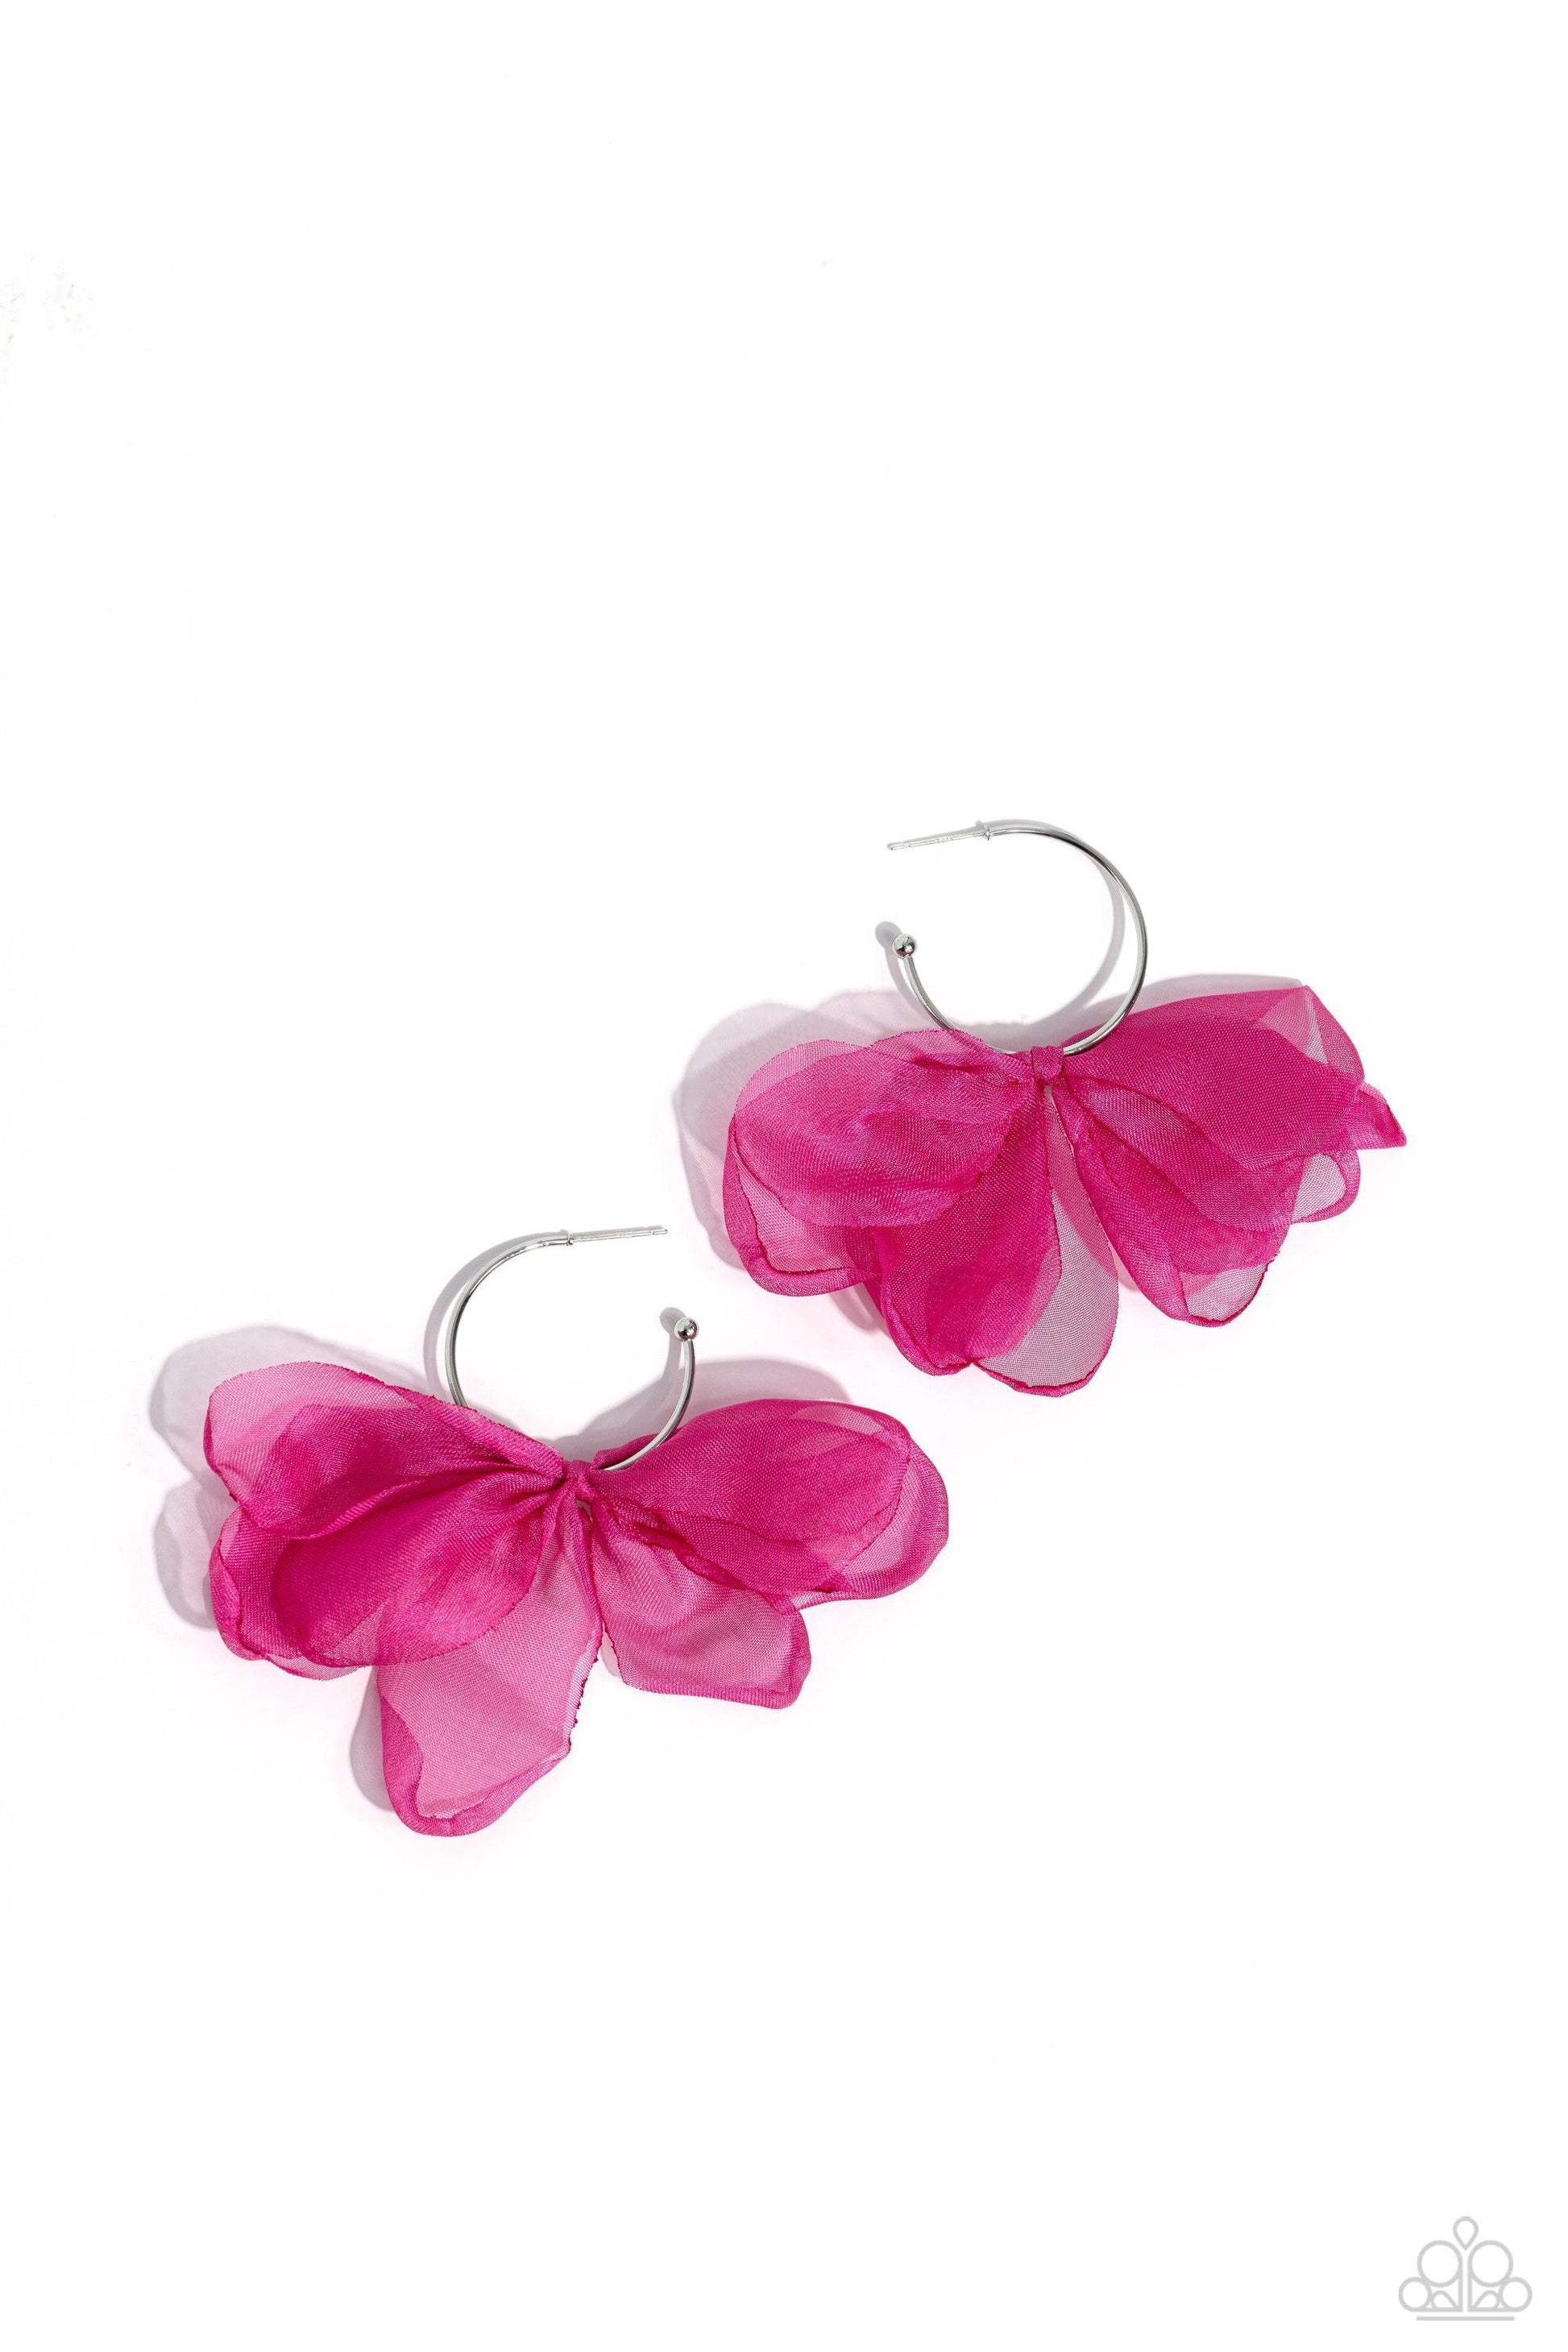 Paparazzi Accessories - Chiffon Class - Pink Earrings - Bling by JessieK